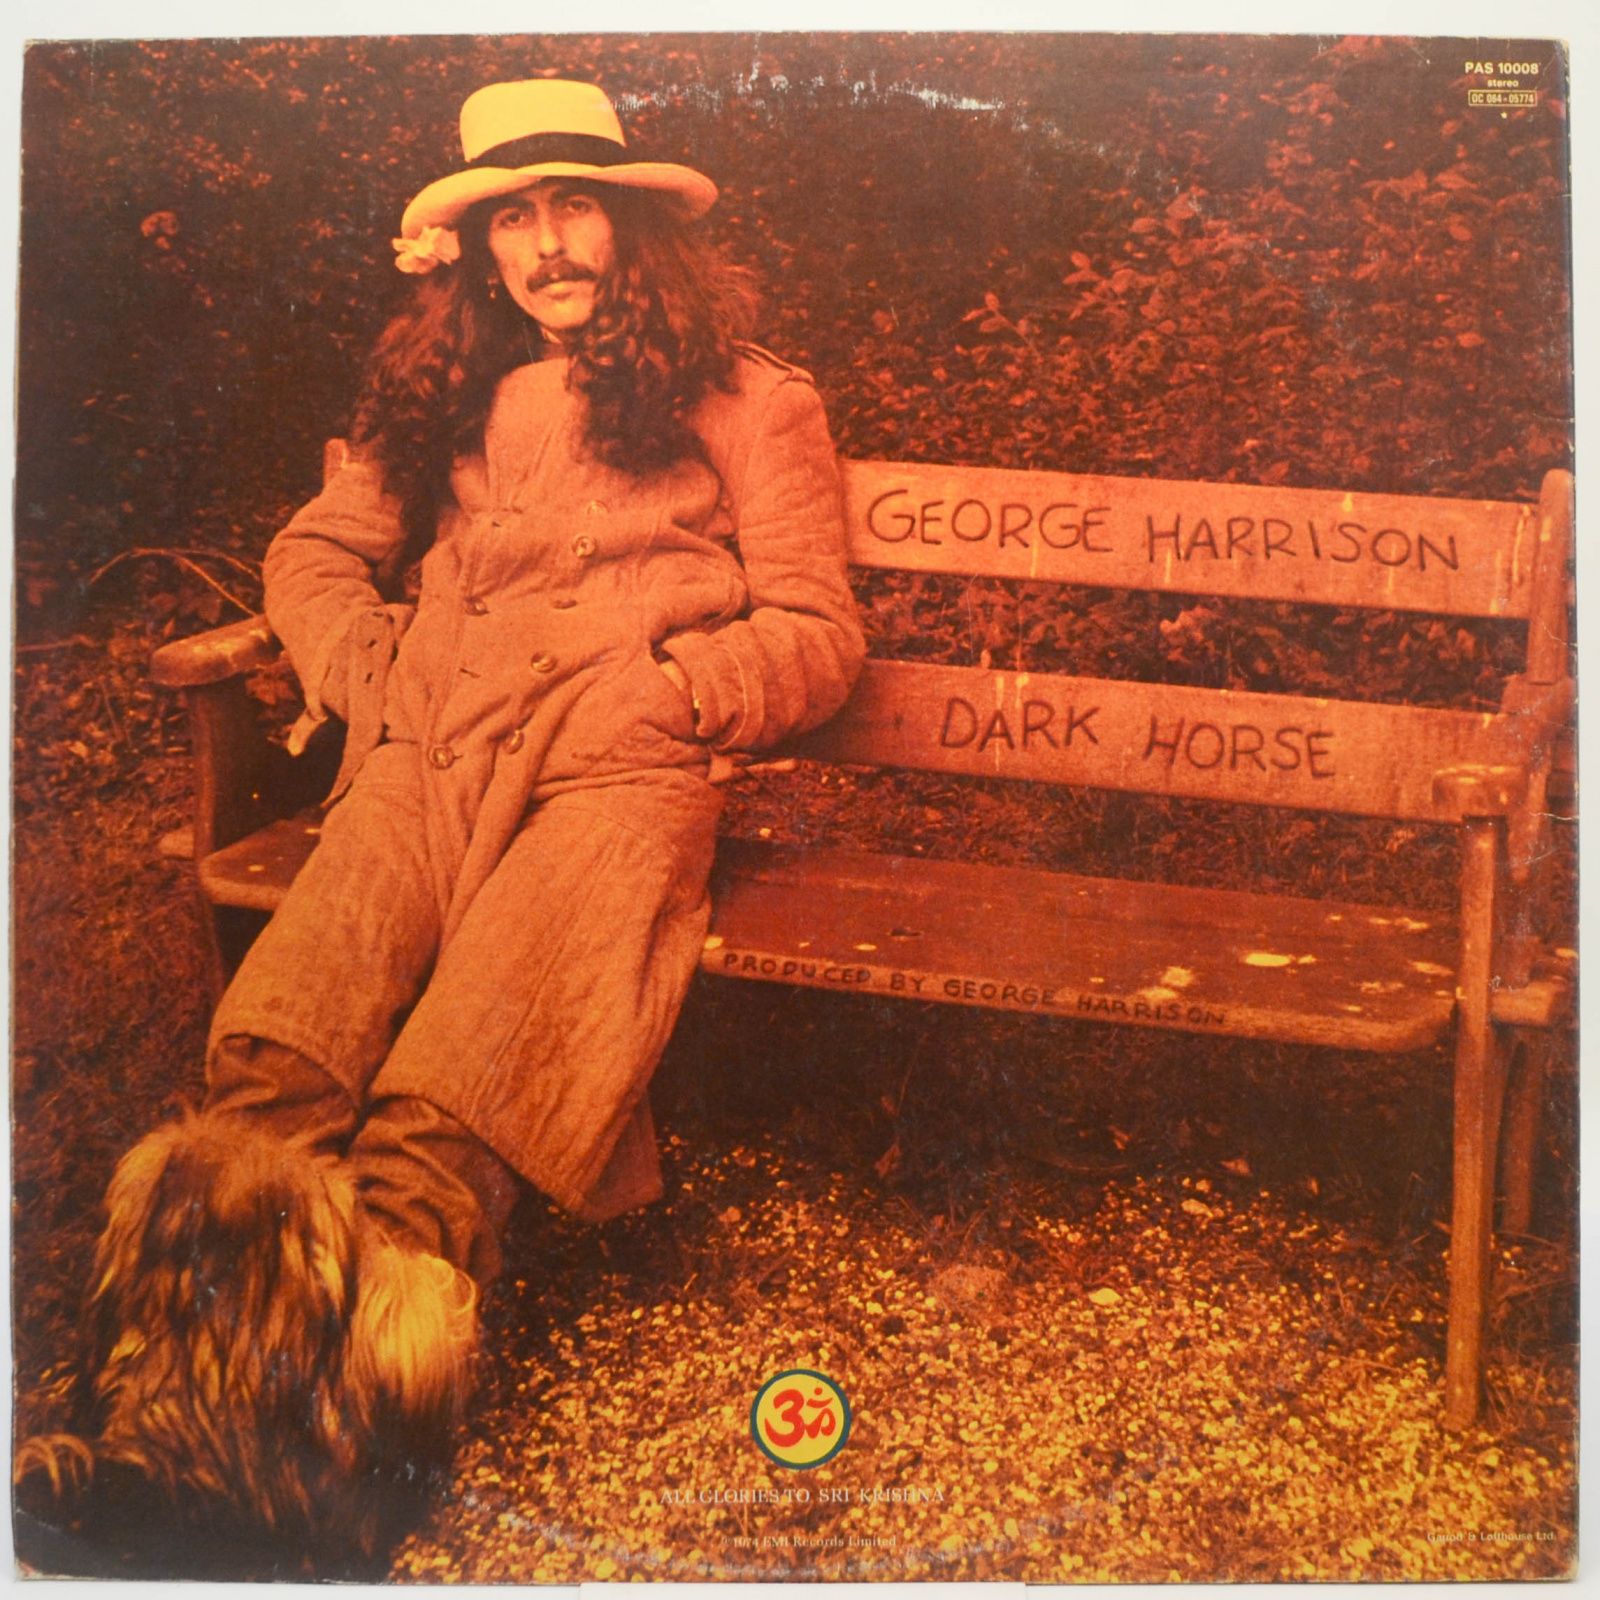 George Harrison — Dark Horse (UK), 1974